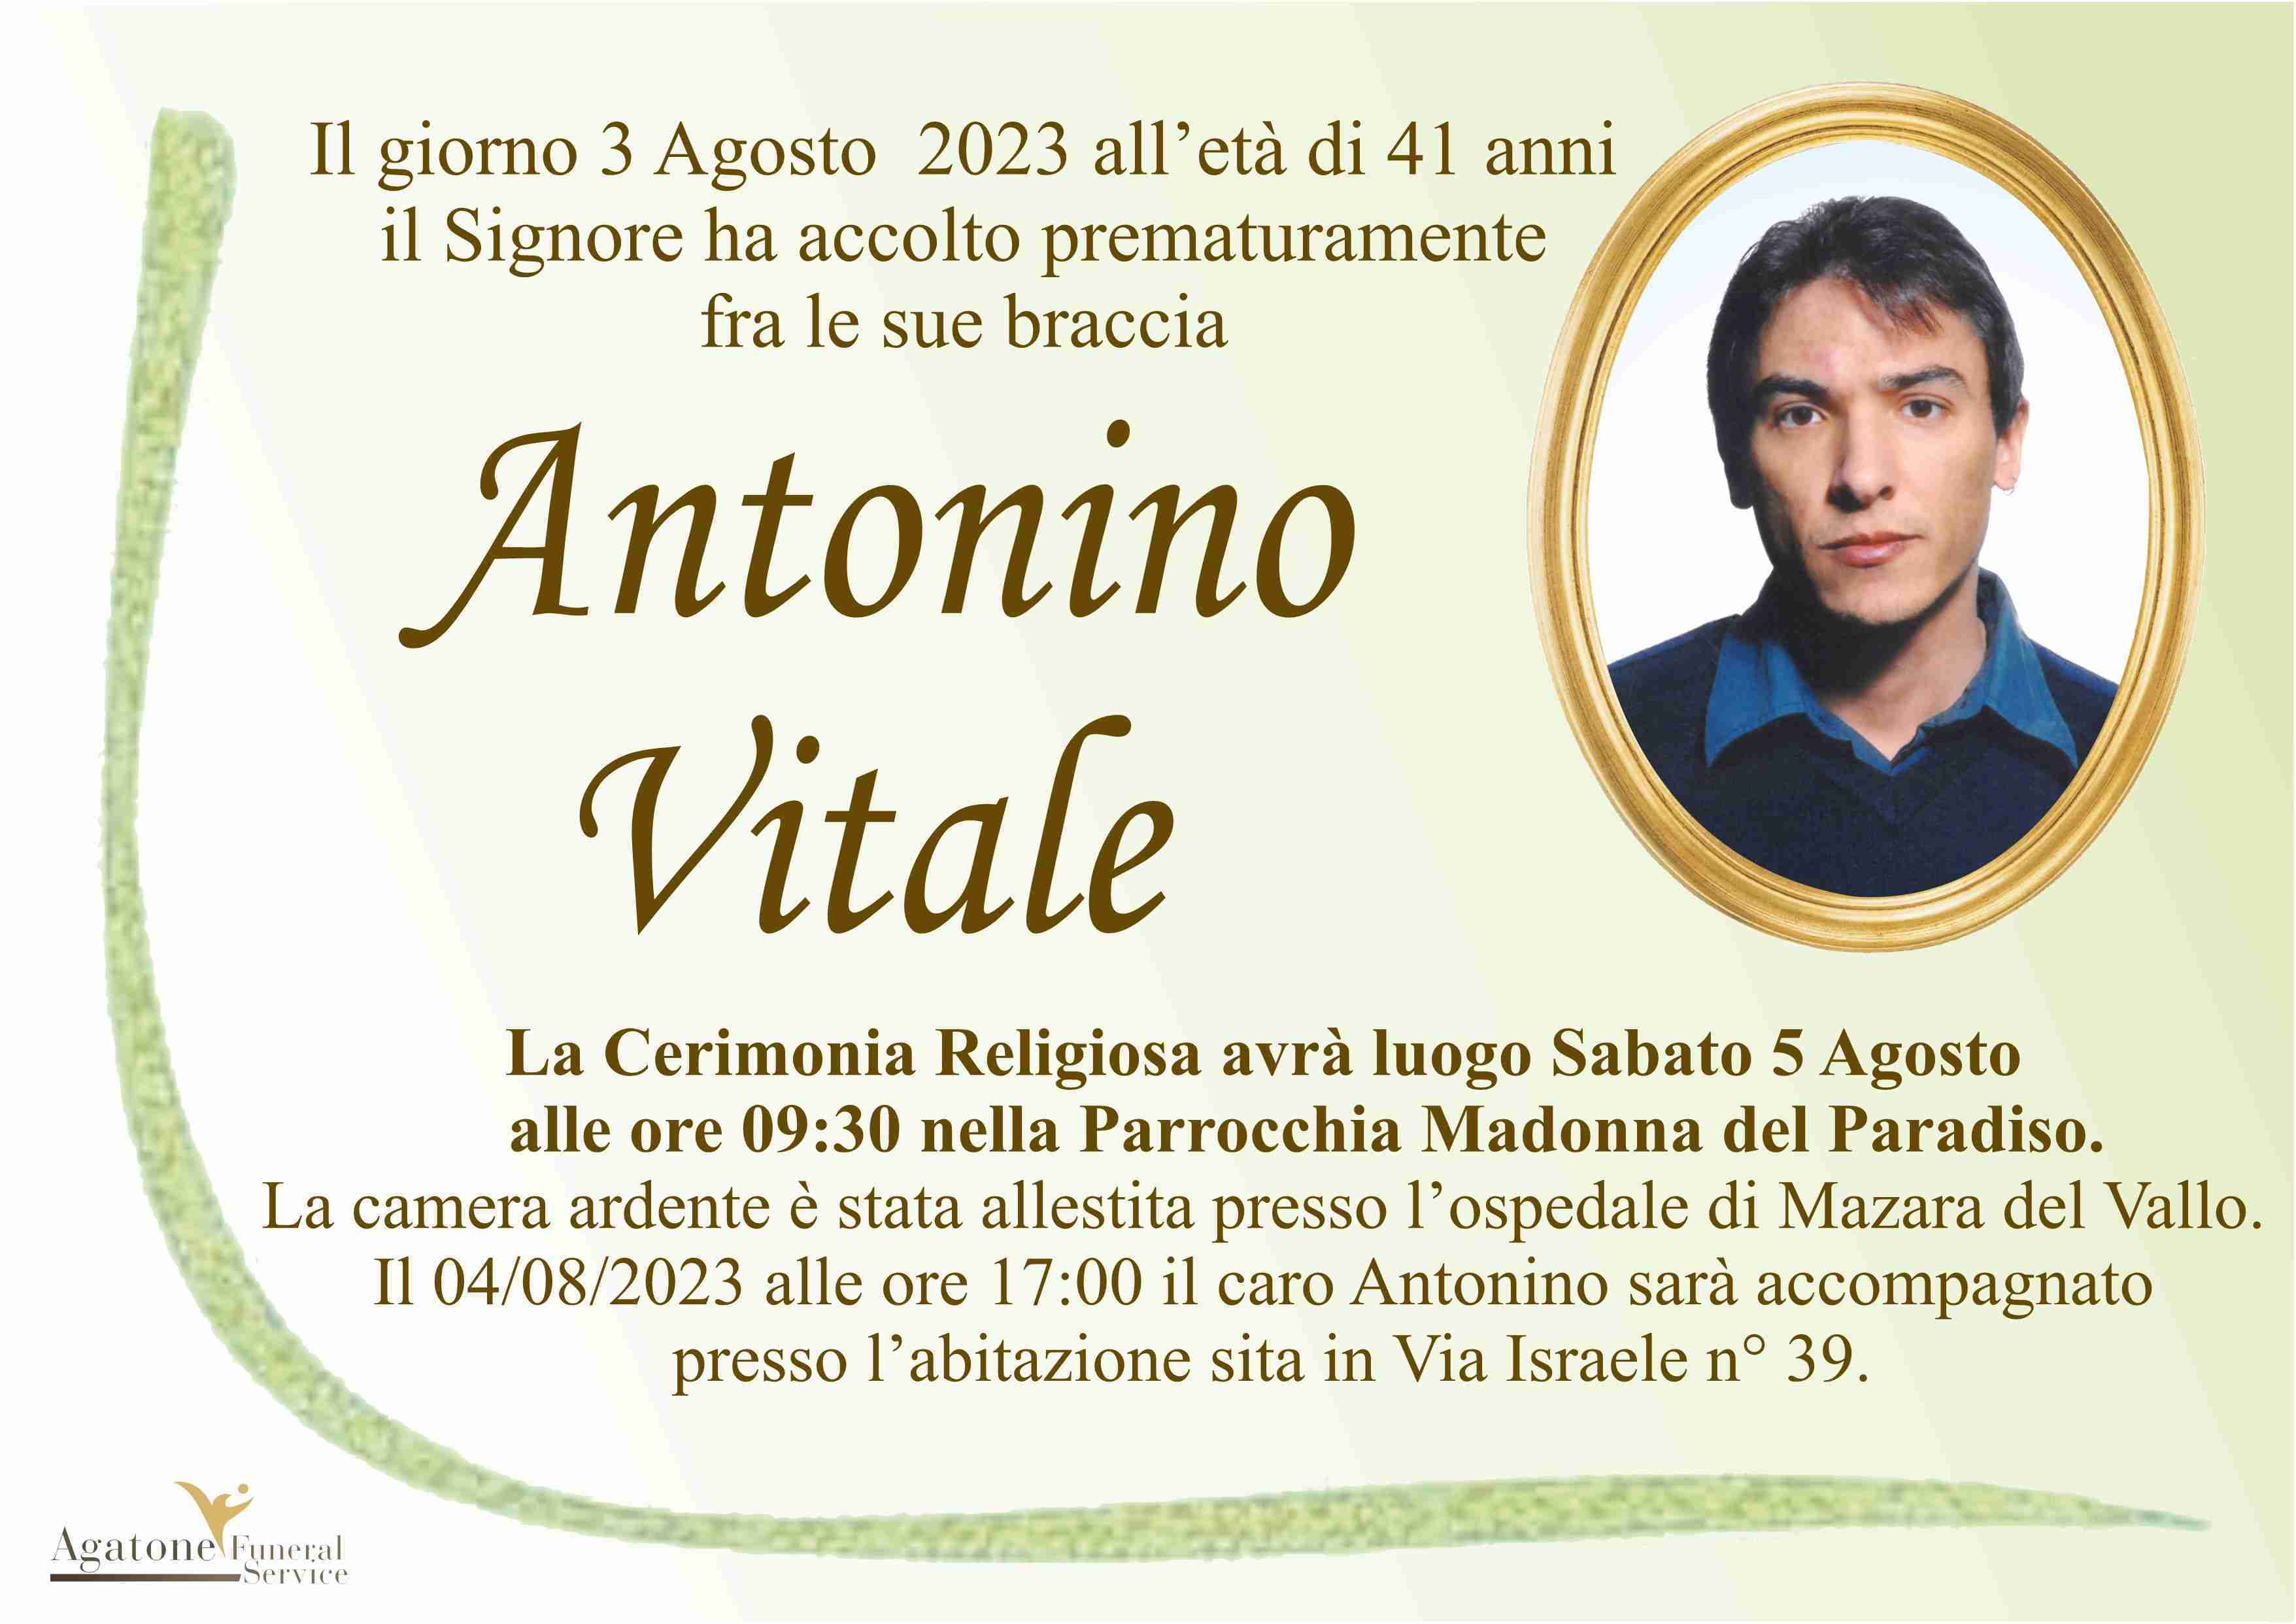 Antonino Vitale